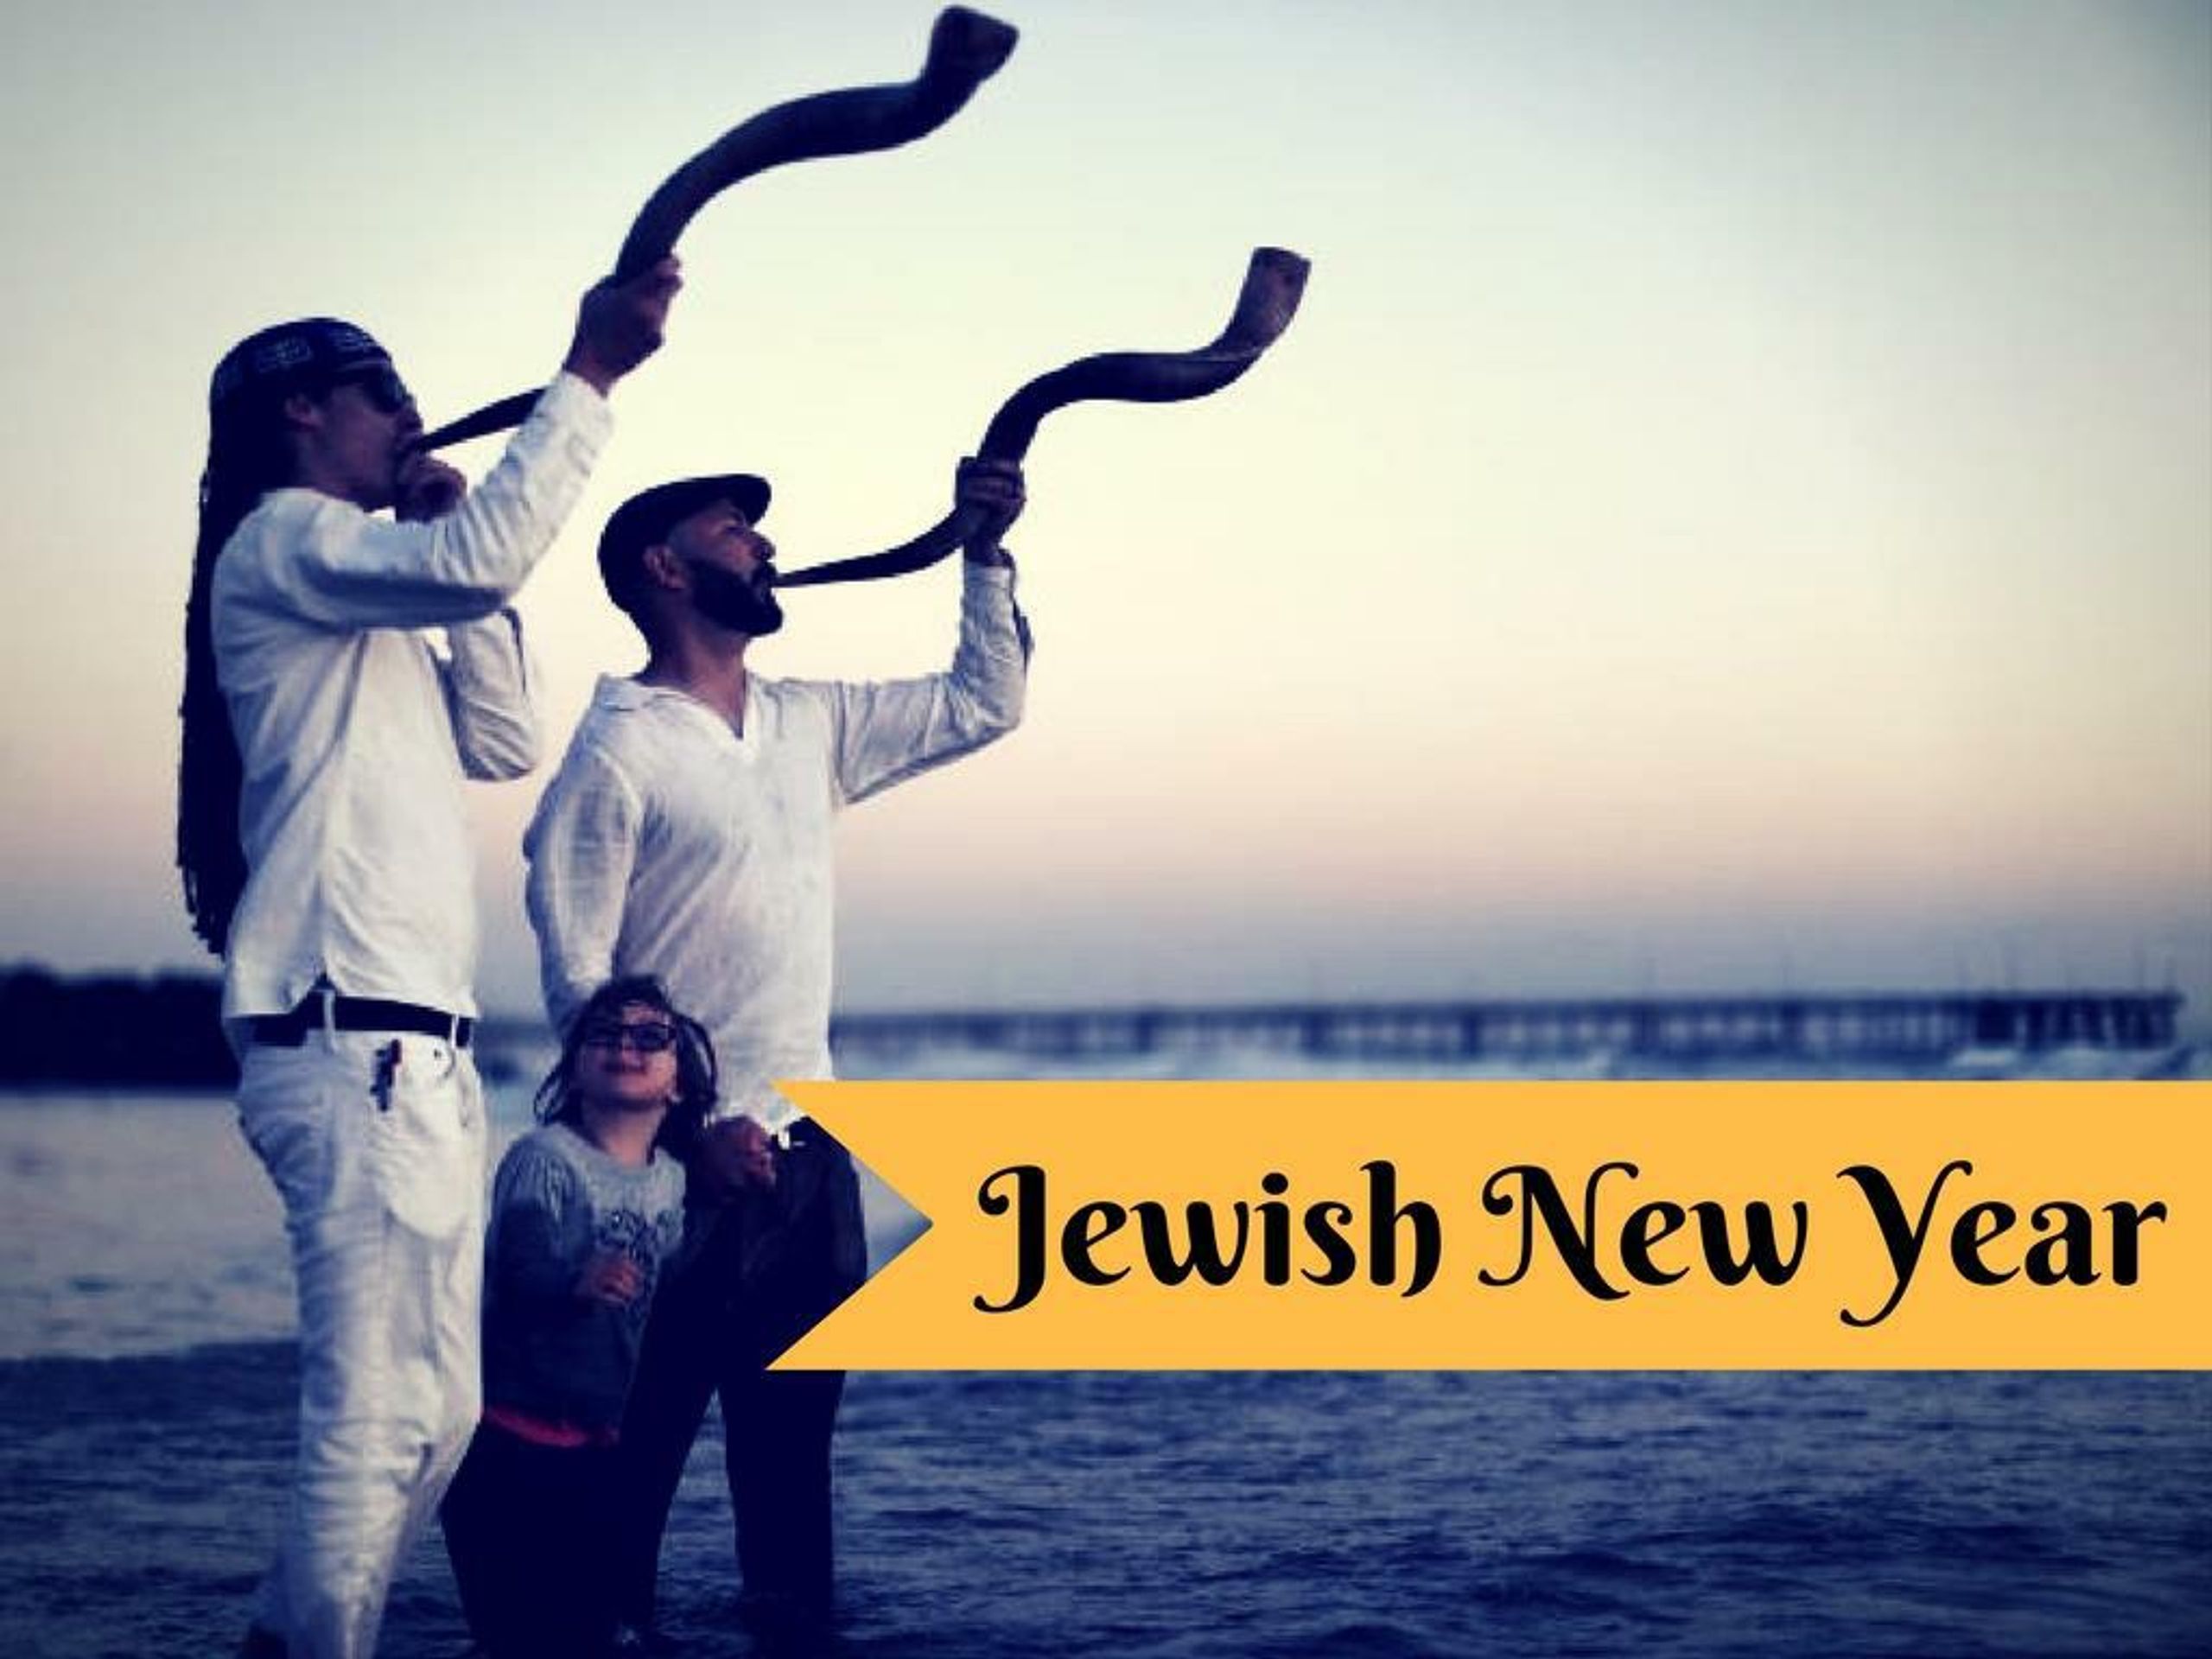 PPT - Jewish New Year 2017 PowerPoint Presentation, free download - ID ...